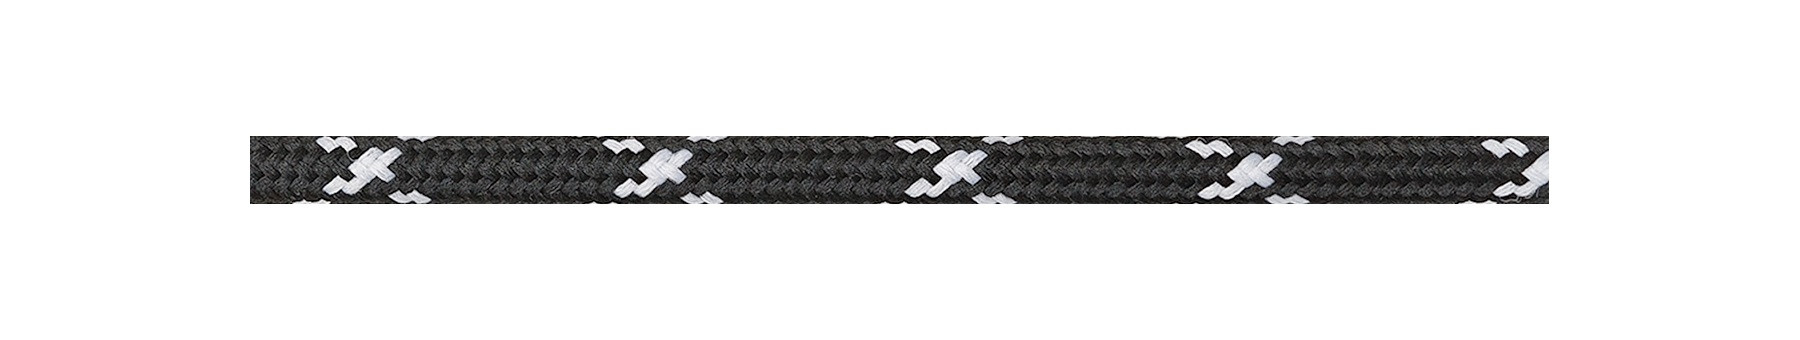 Textile Cable Black-White